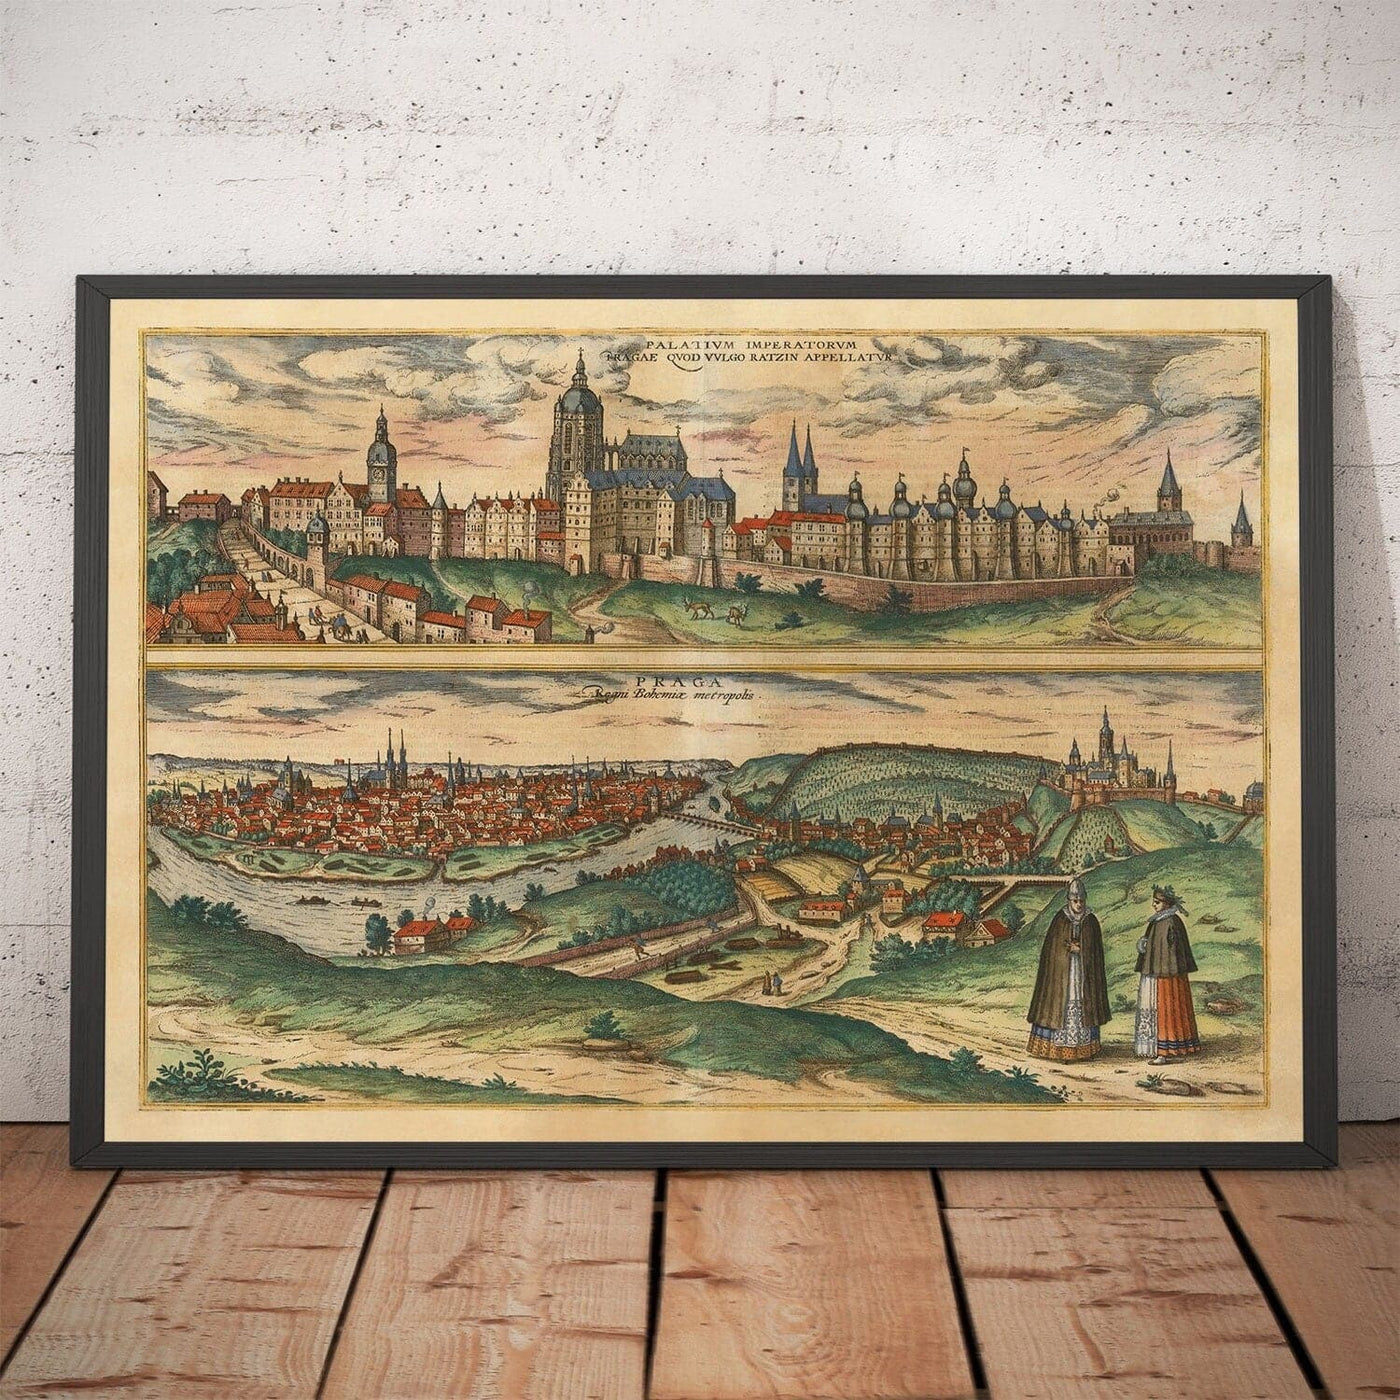 Old Map of Prague, Czechia par Georg Braun, 1572 - Bohême, château, vltava, église Týn Teyn, vieille ville, Mala Strana